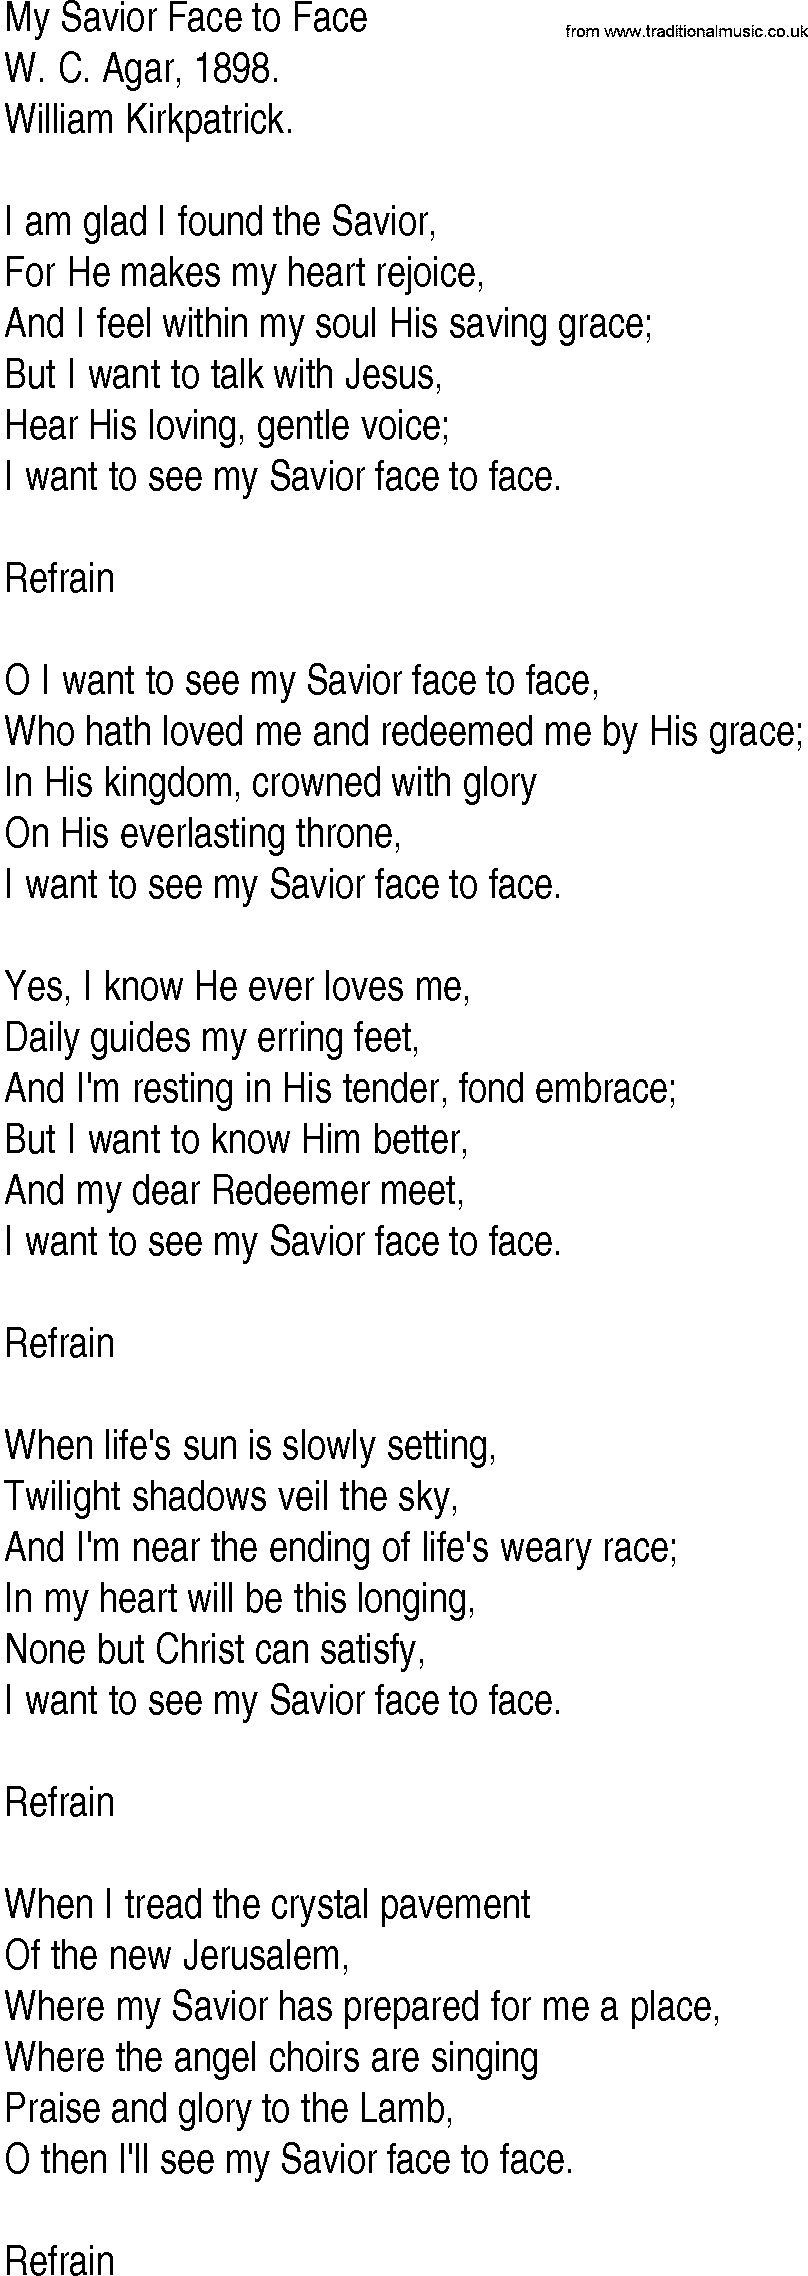 Hymn and Gospel Song: My Savior Face to Face by W C Agar lyrics